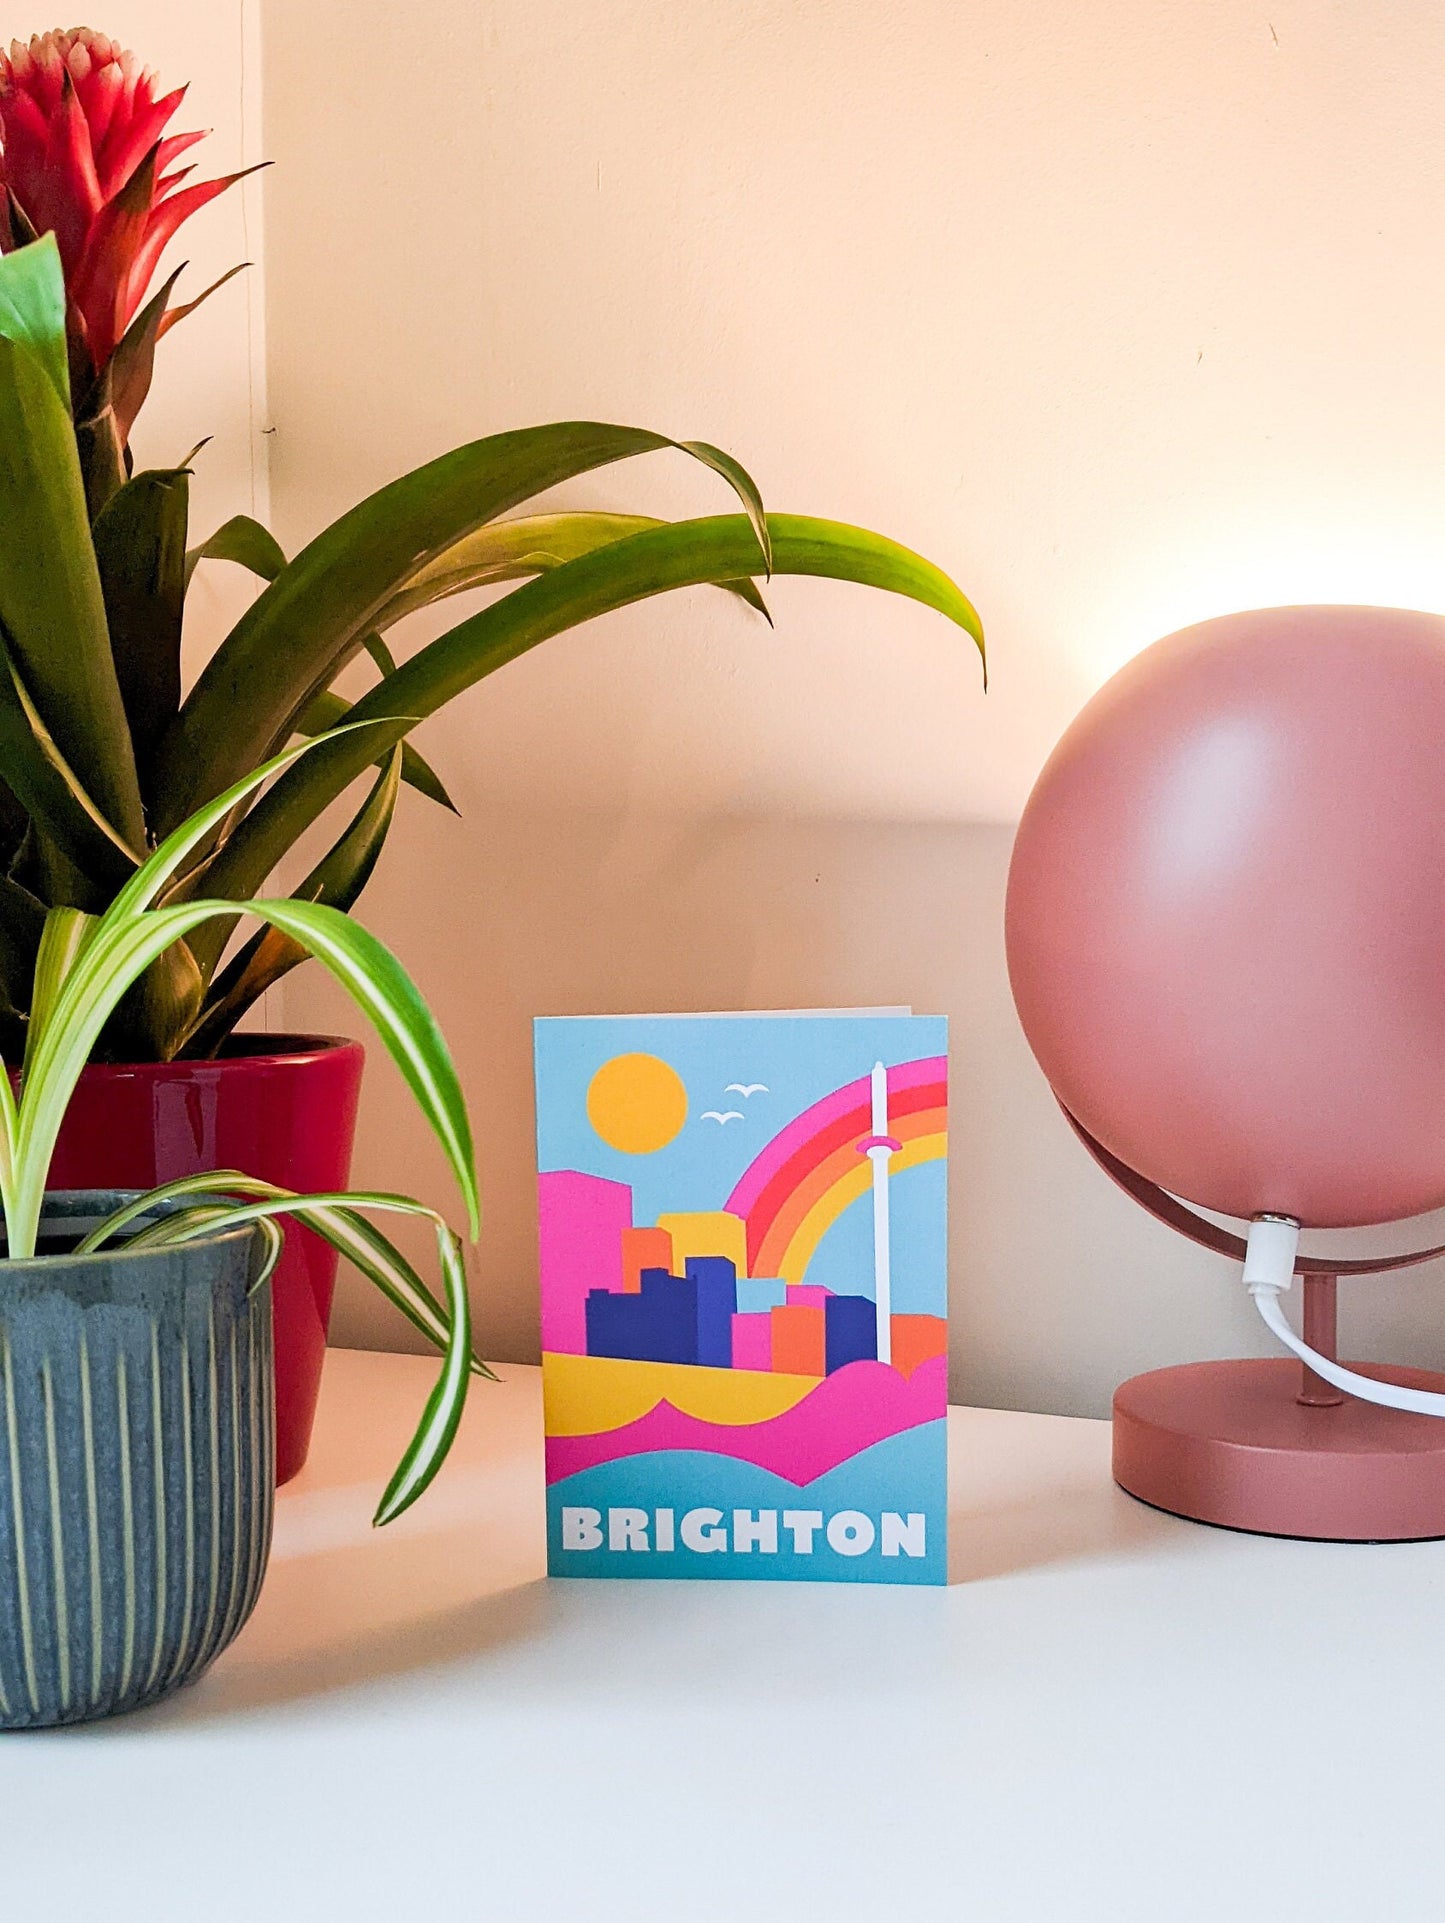 Brighton Greeting Card